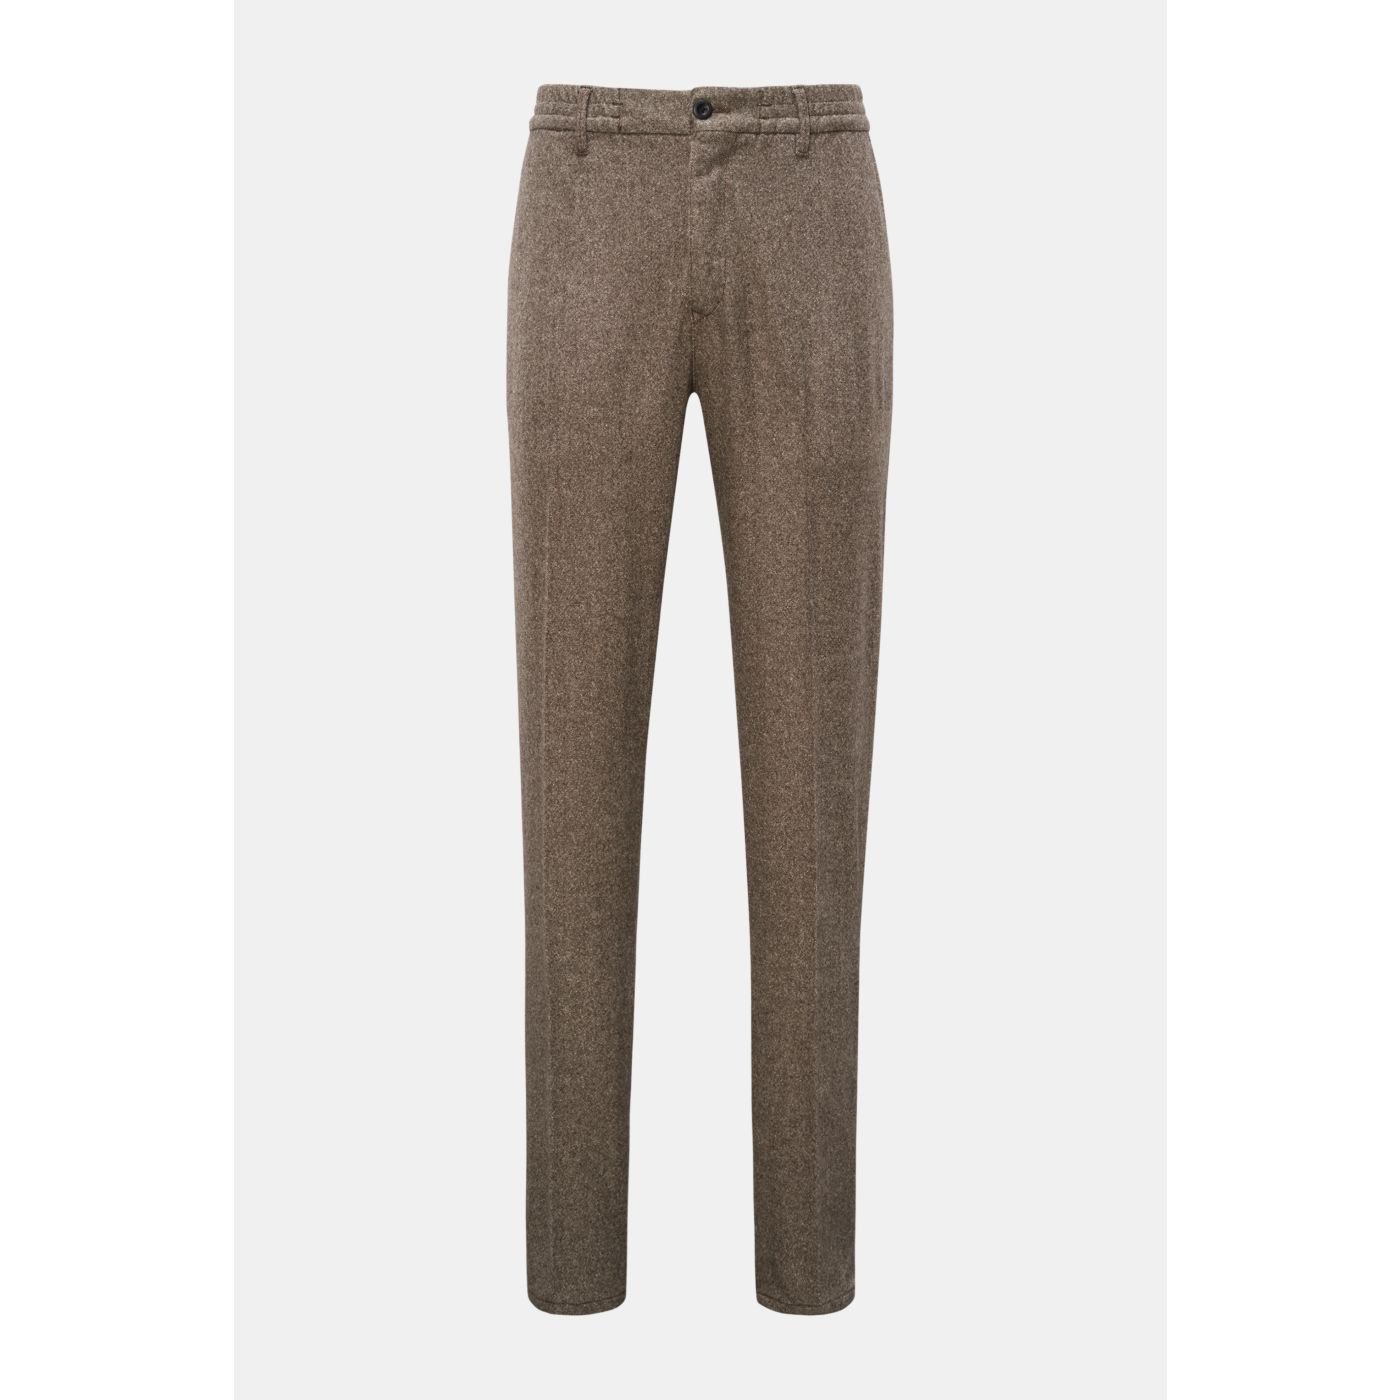 INCOTEX SLACKS flannel jogger pants grey-brown | BRAUN Hamburg